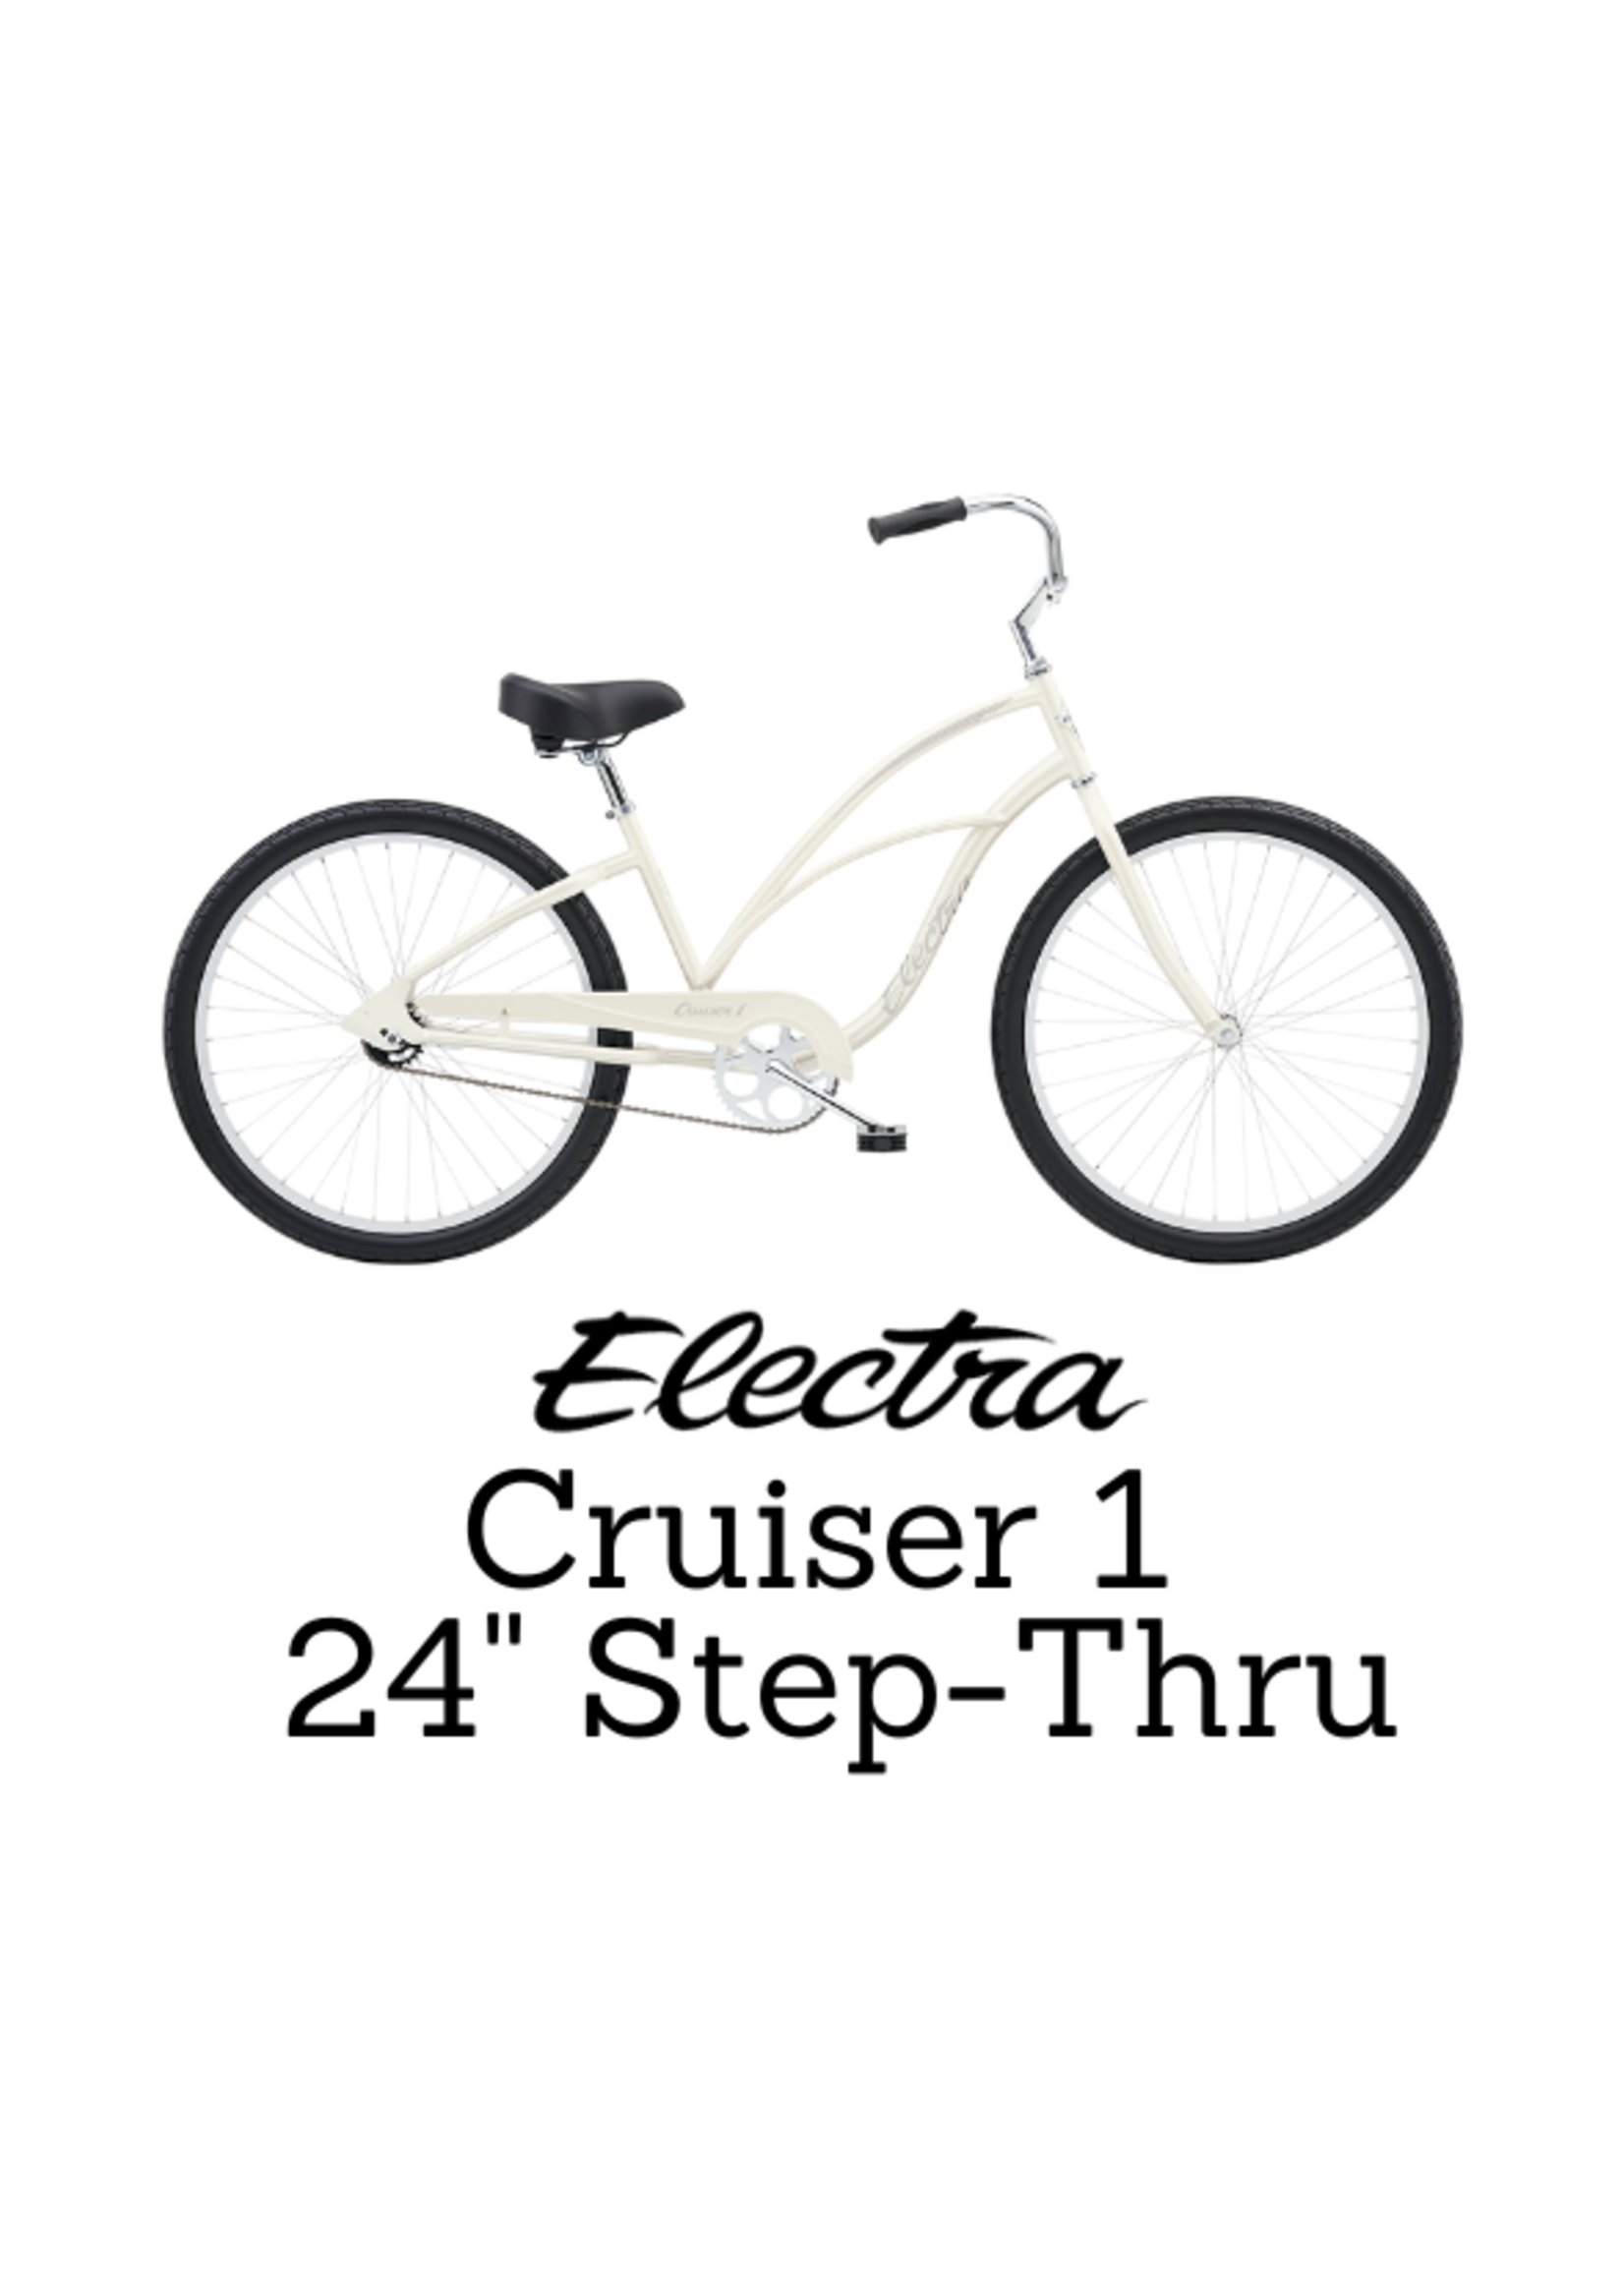 Electra Electra Cruiser 1 24" Step-Thru